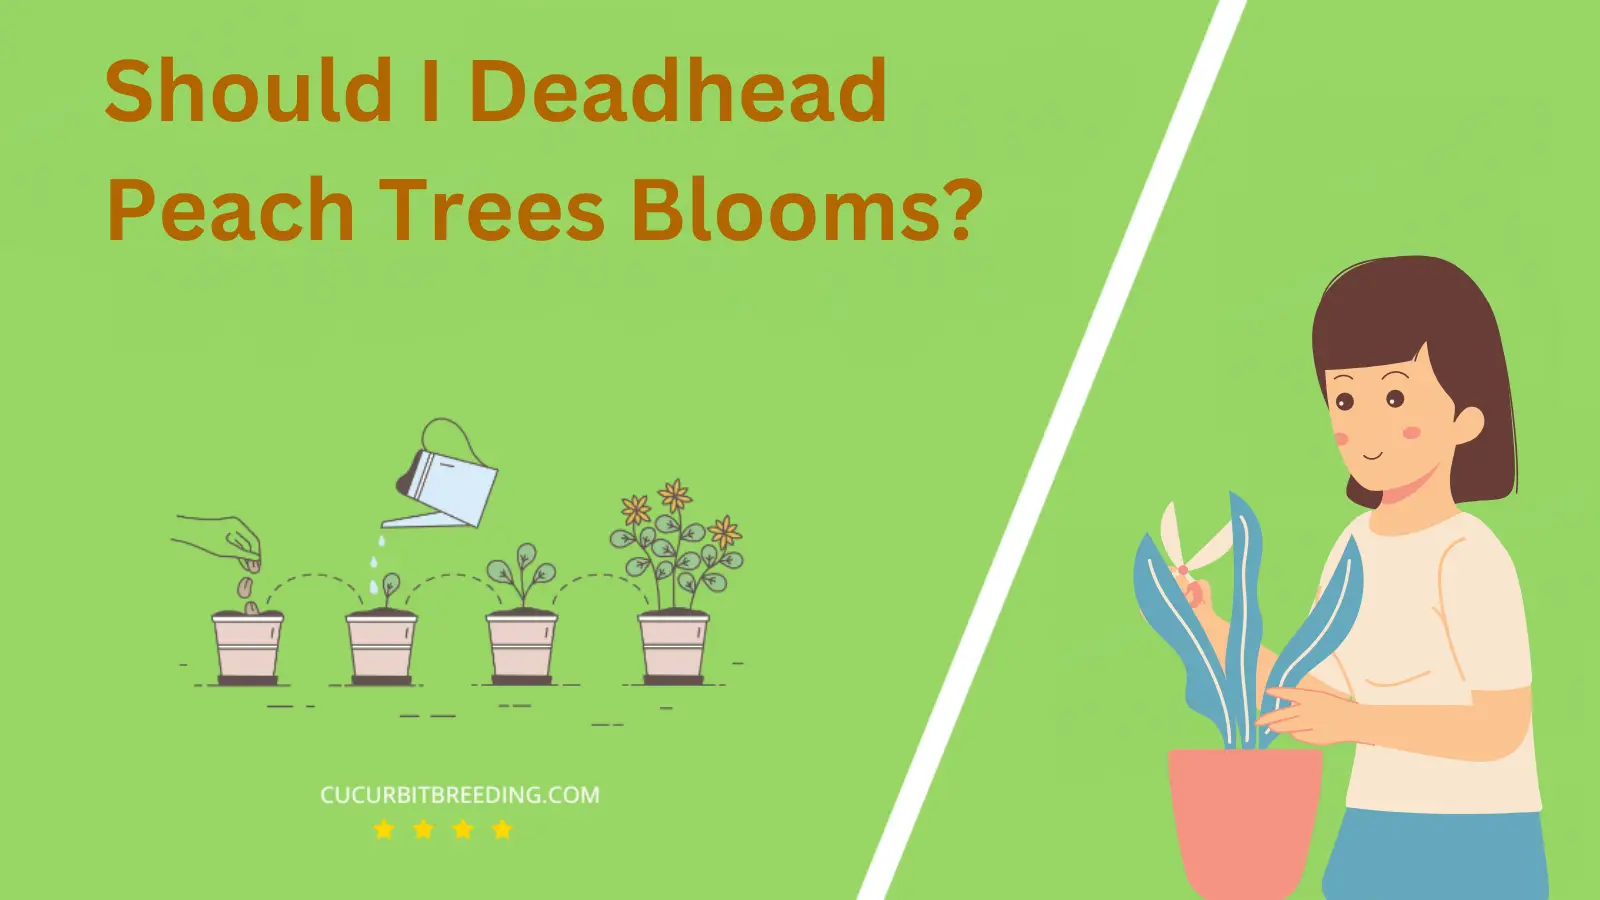 Should I Deadhead Peach Trees Blooms?